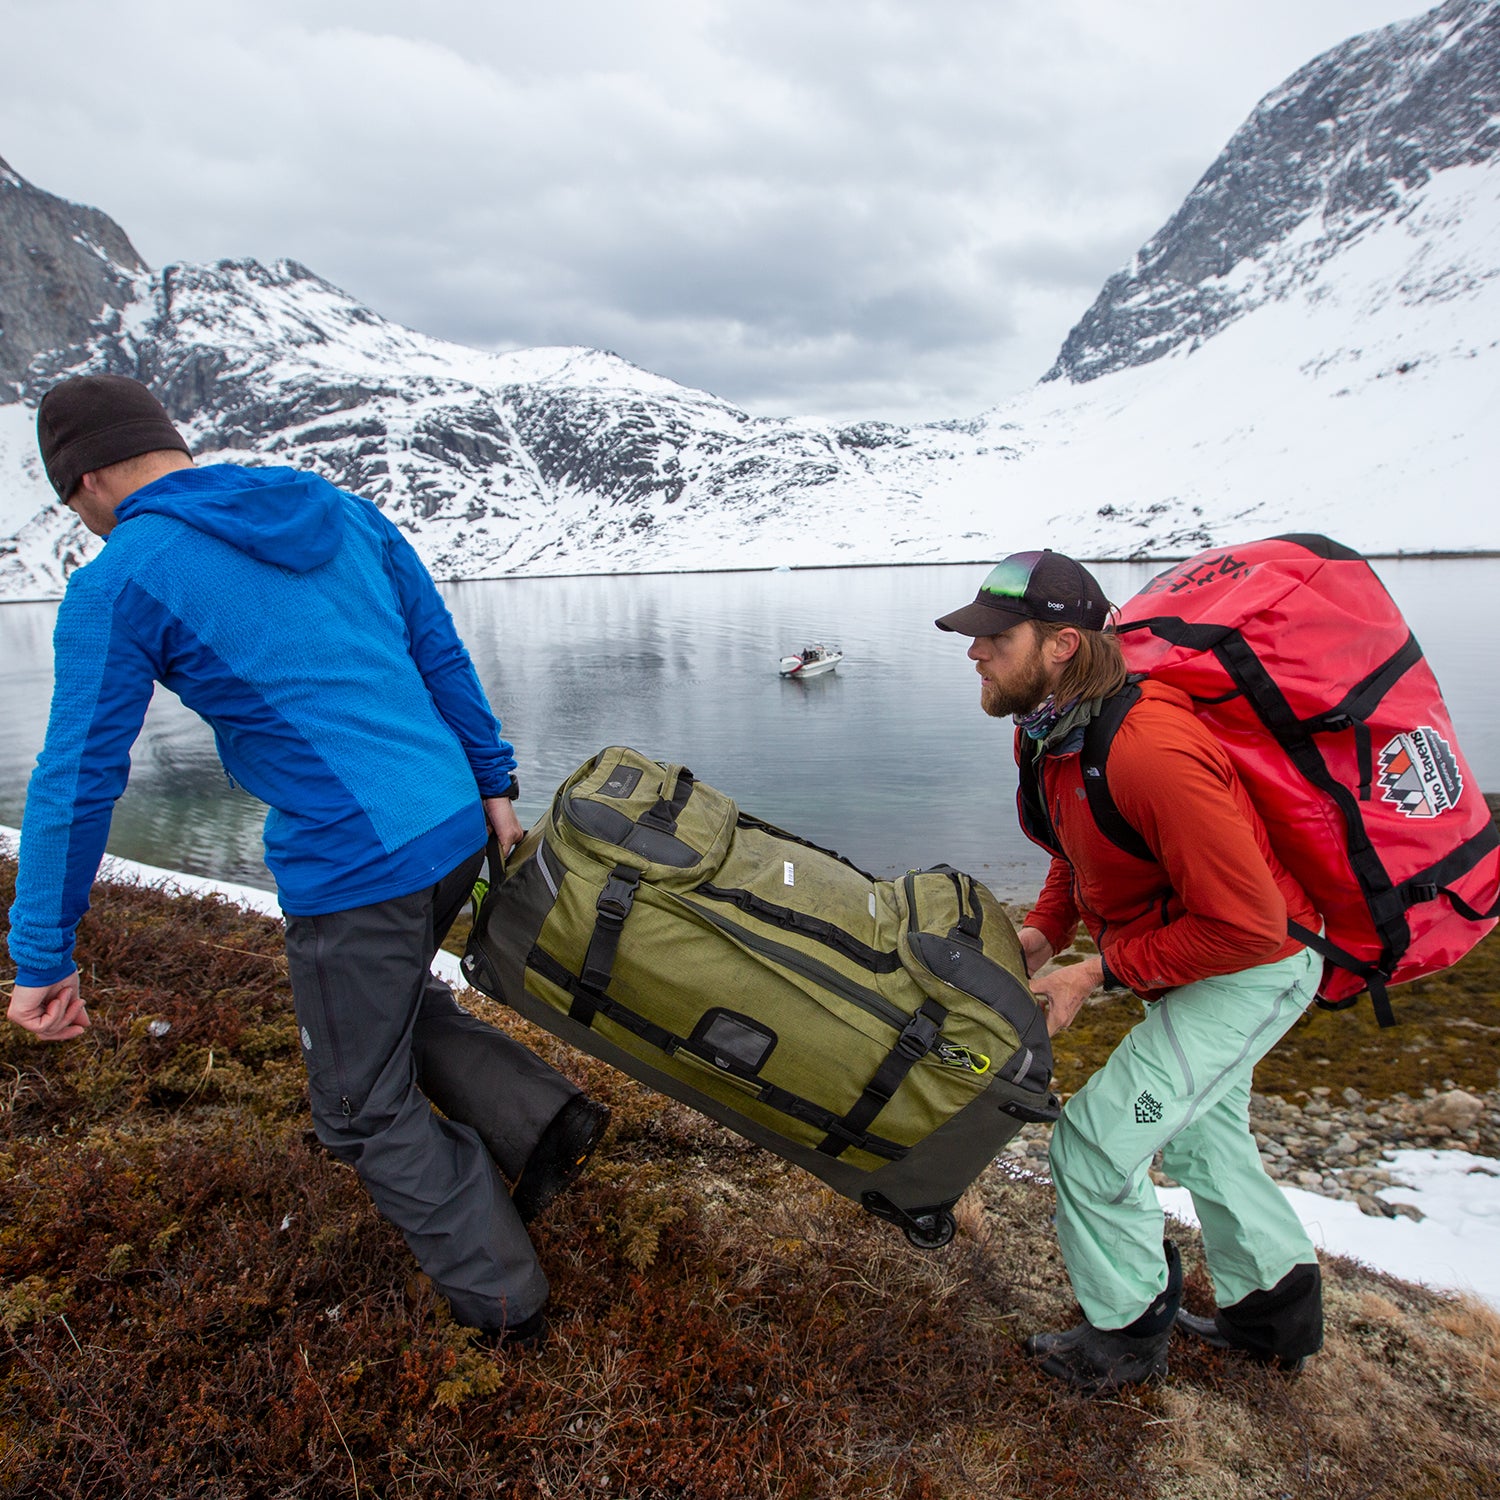 Best Travel Ski Bags: Top Picks for Snowy Adventures!